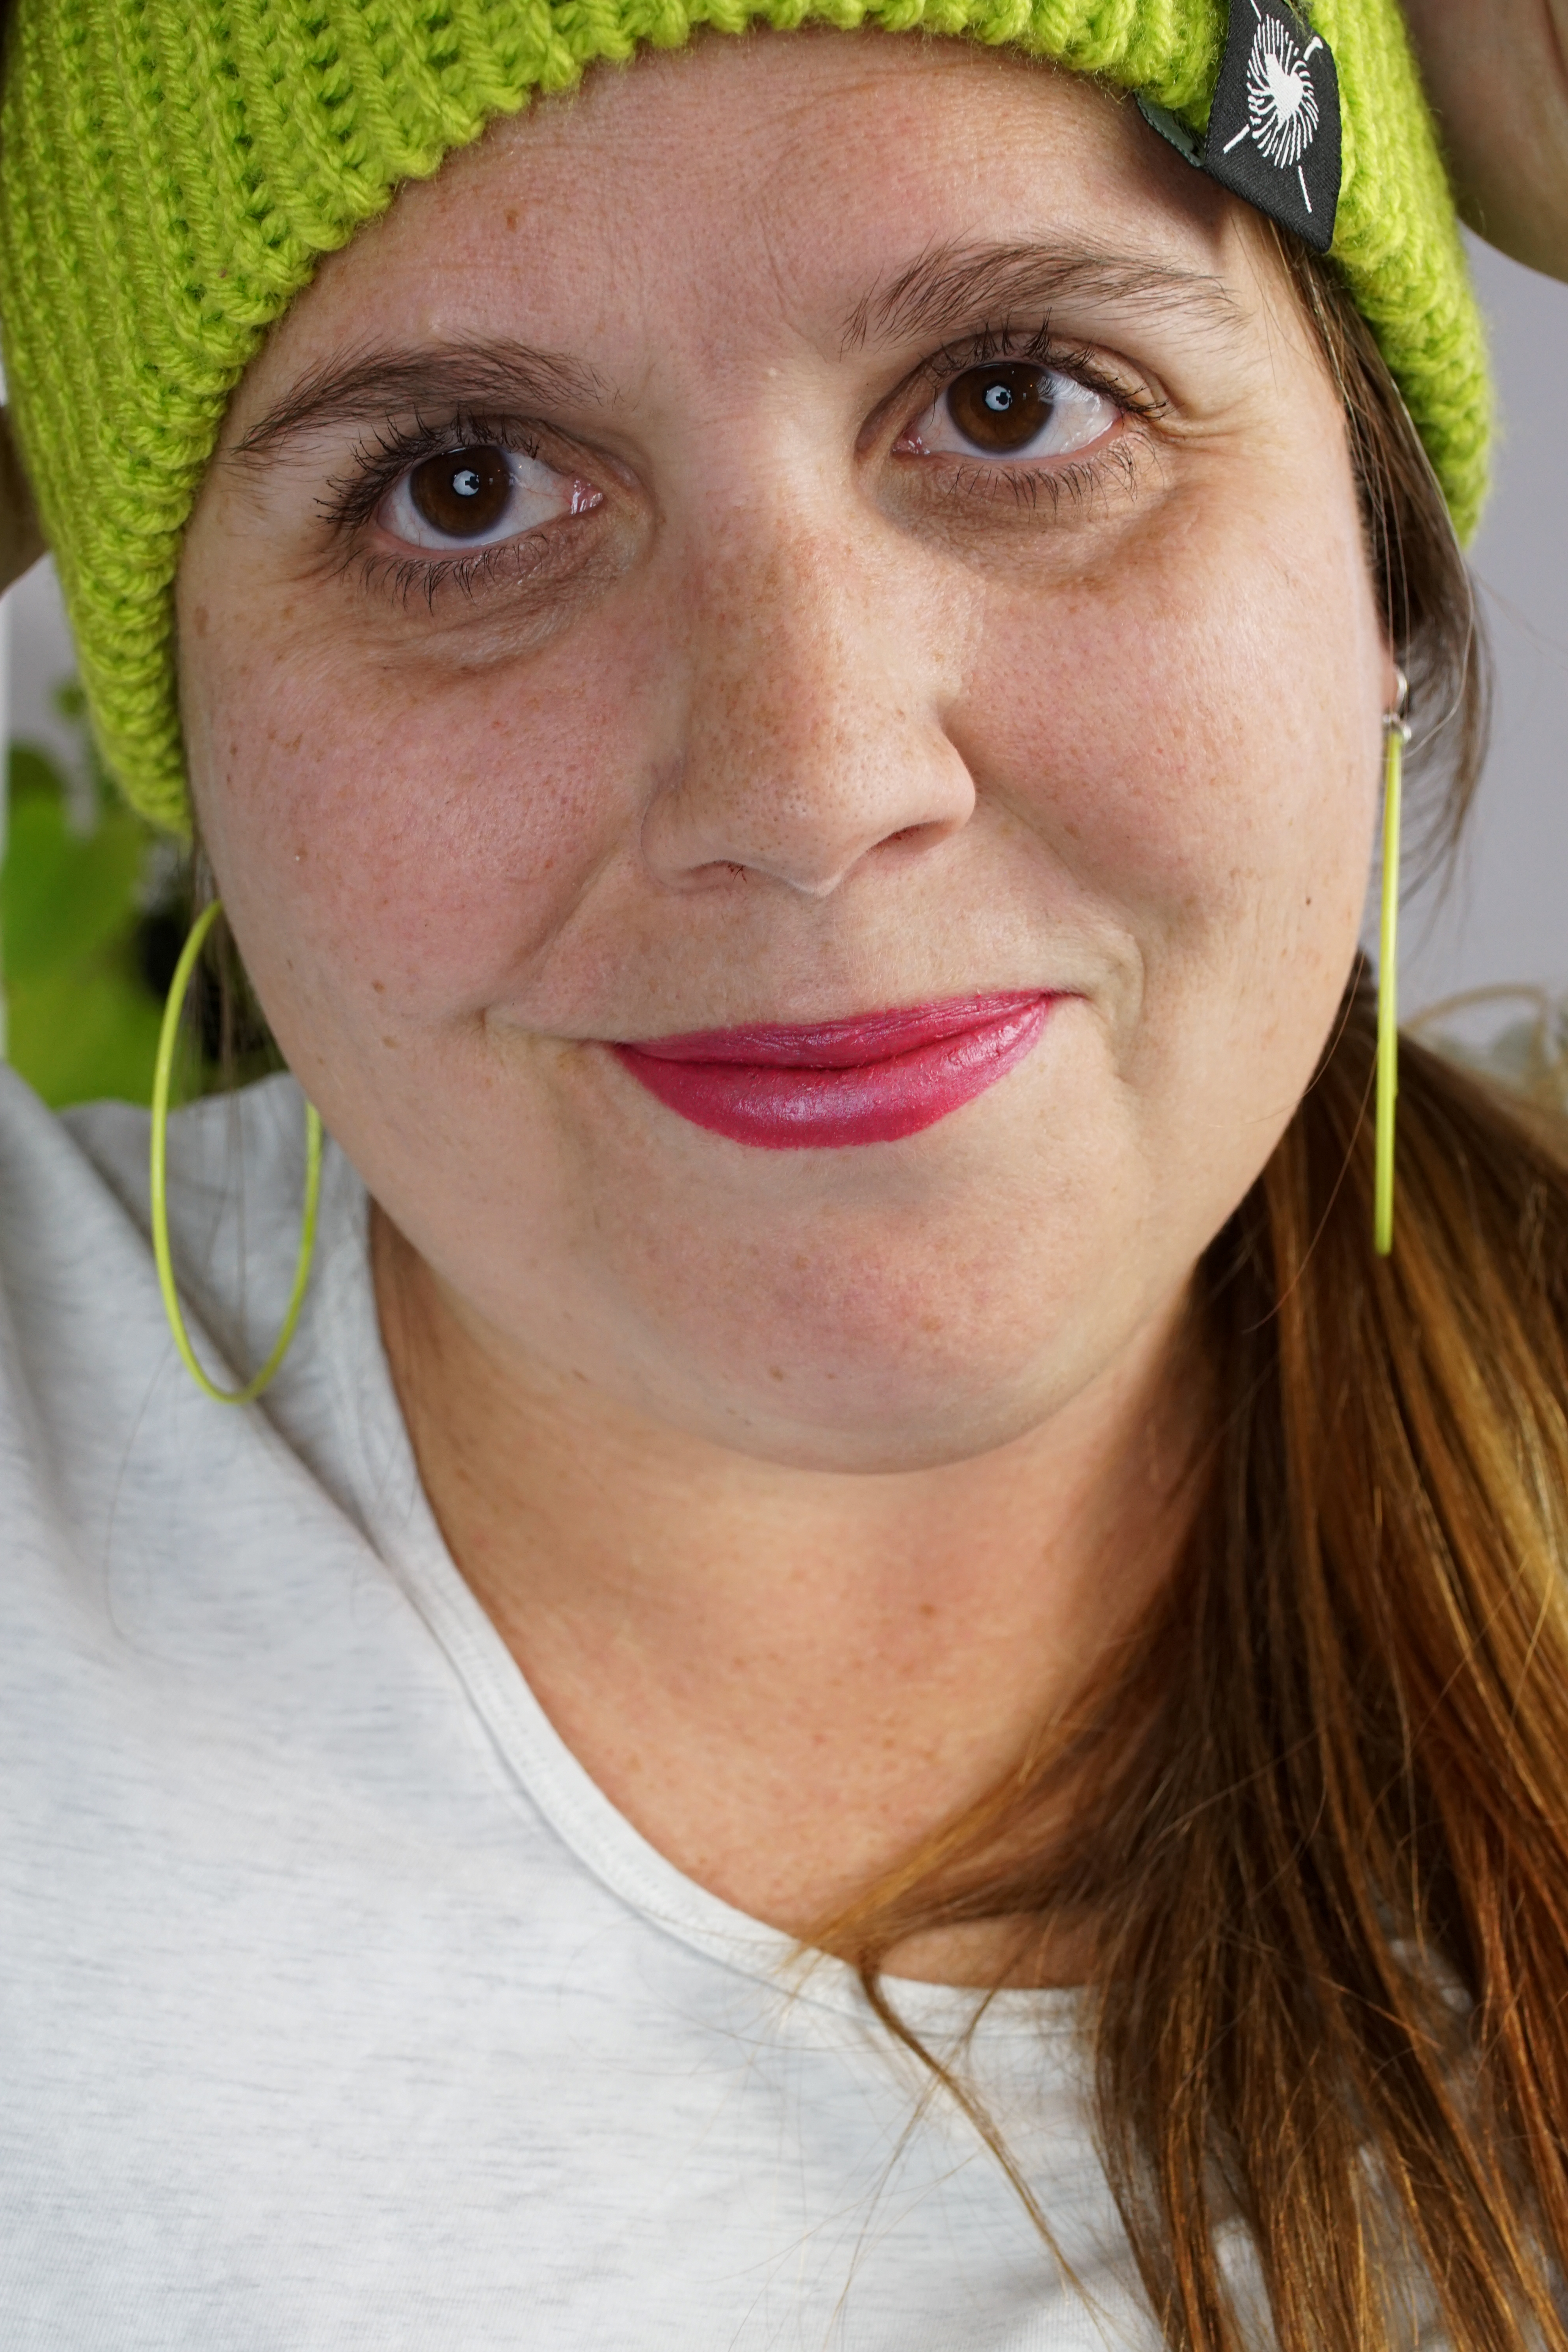 woman wearing neon knit hat and large neon hoop earrings